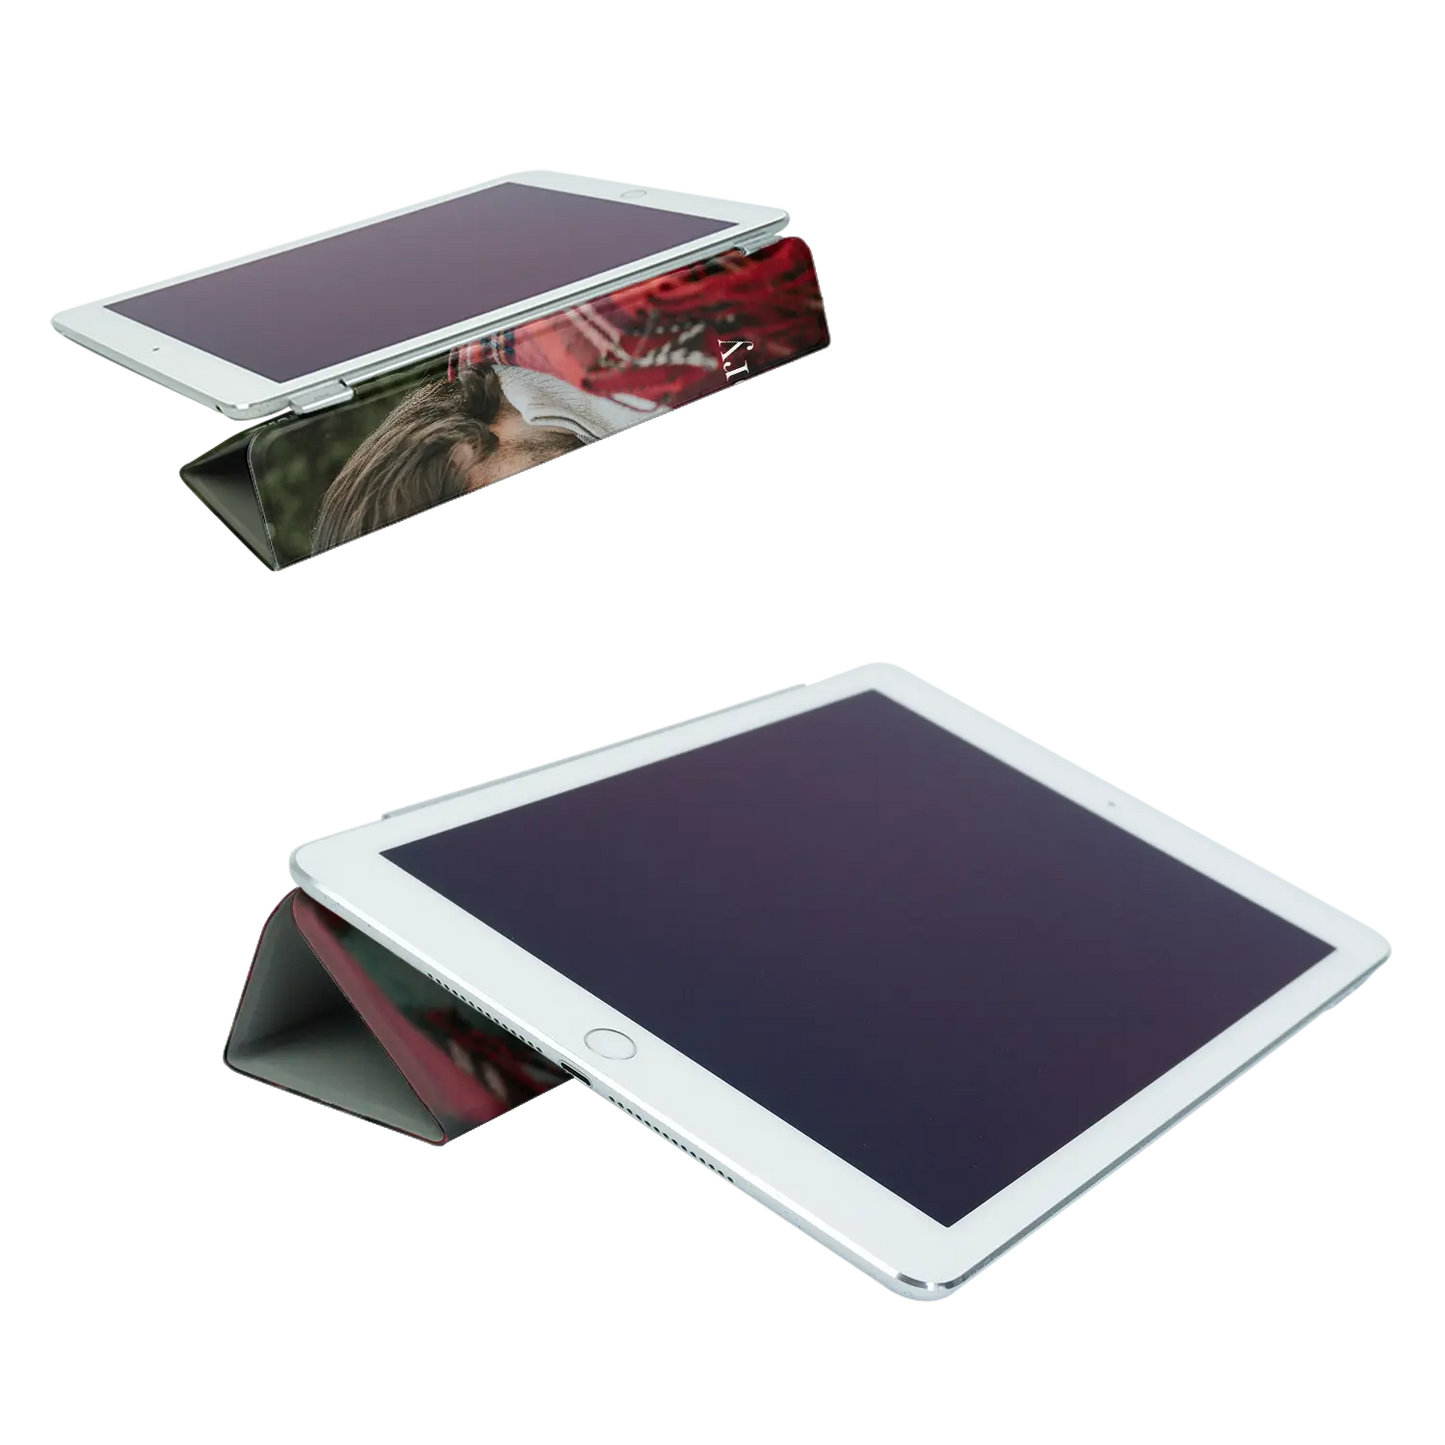 1 Photo - Personalised iPad Case